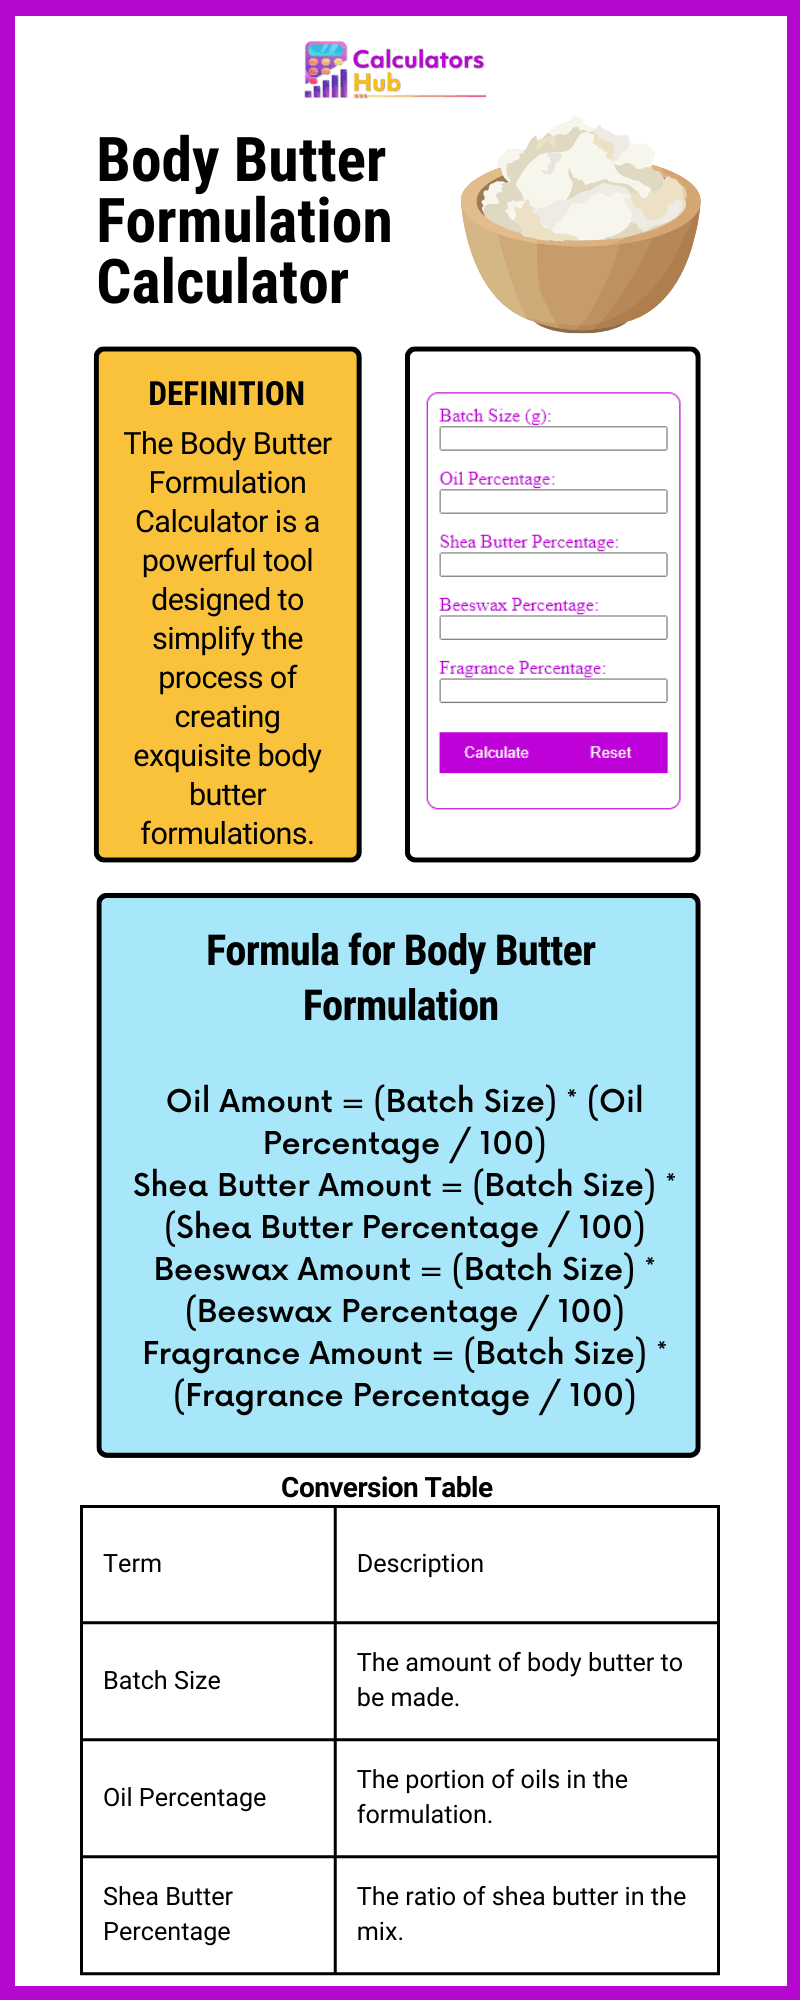 Calculateur de formulation de beurre corporel